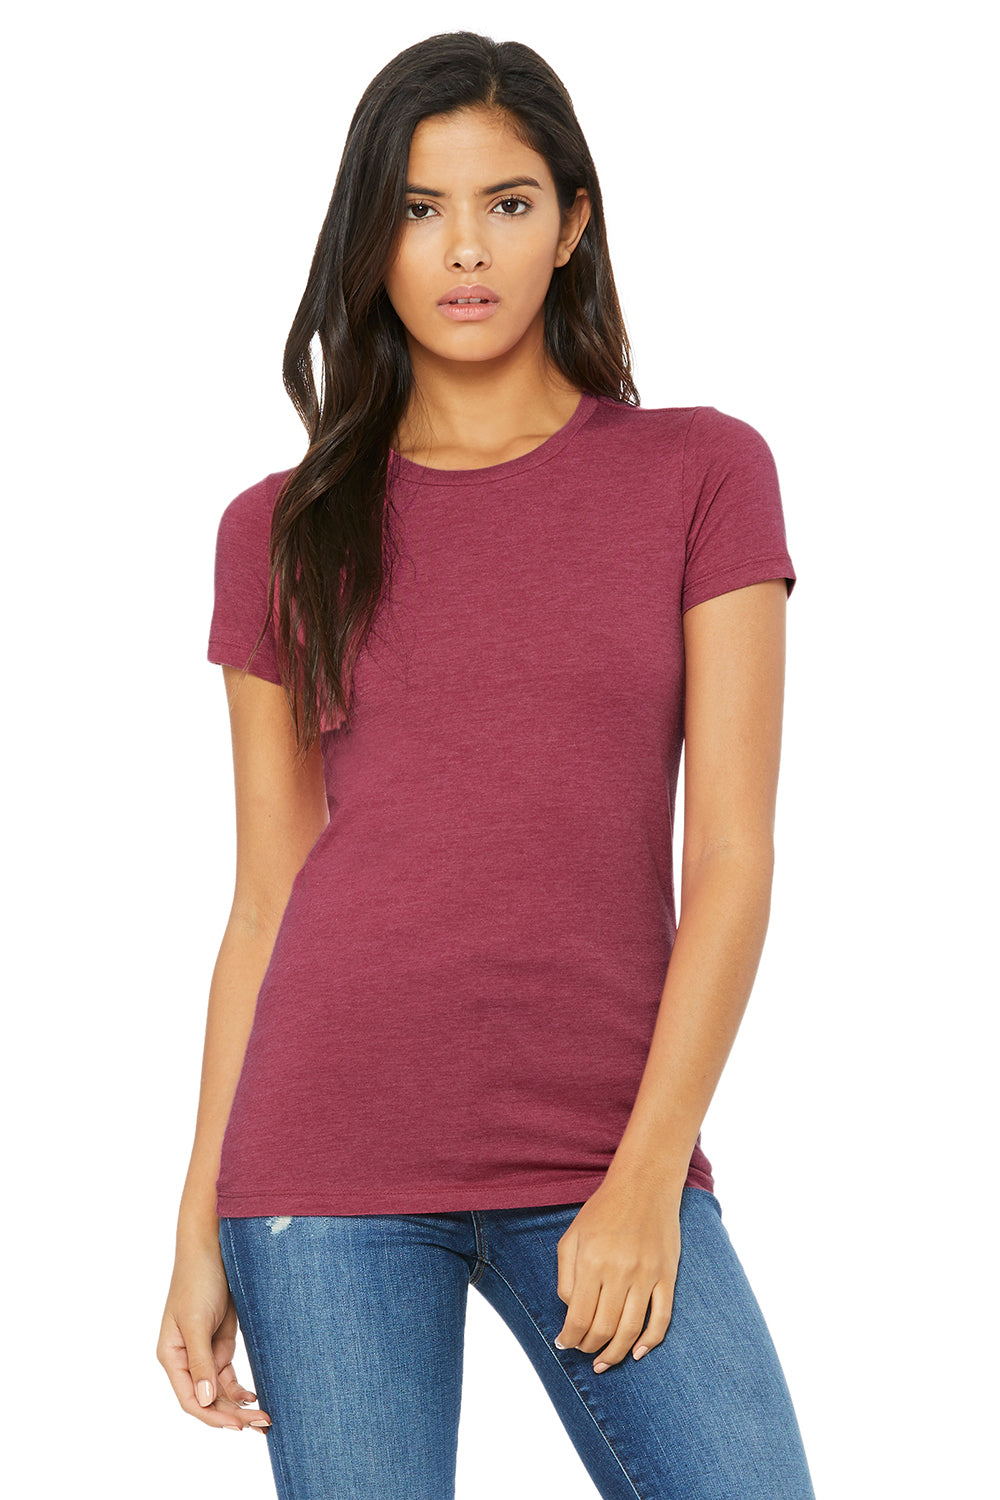 Bella + Canvas 6004 Womens The Favorite Short Sleeve Crewneck T-Shirt Heather Raspberry Pink Front